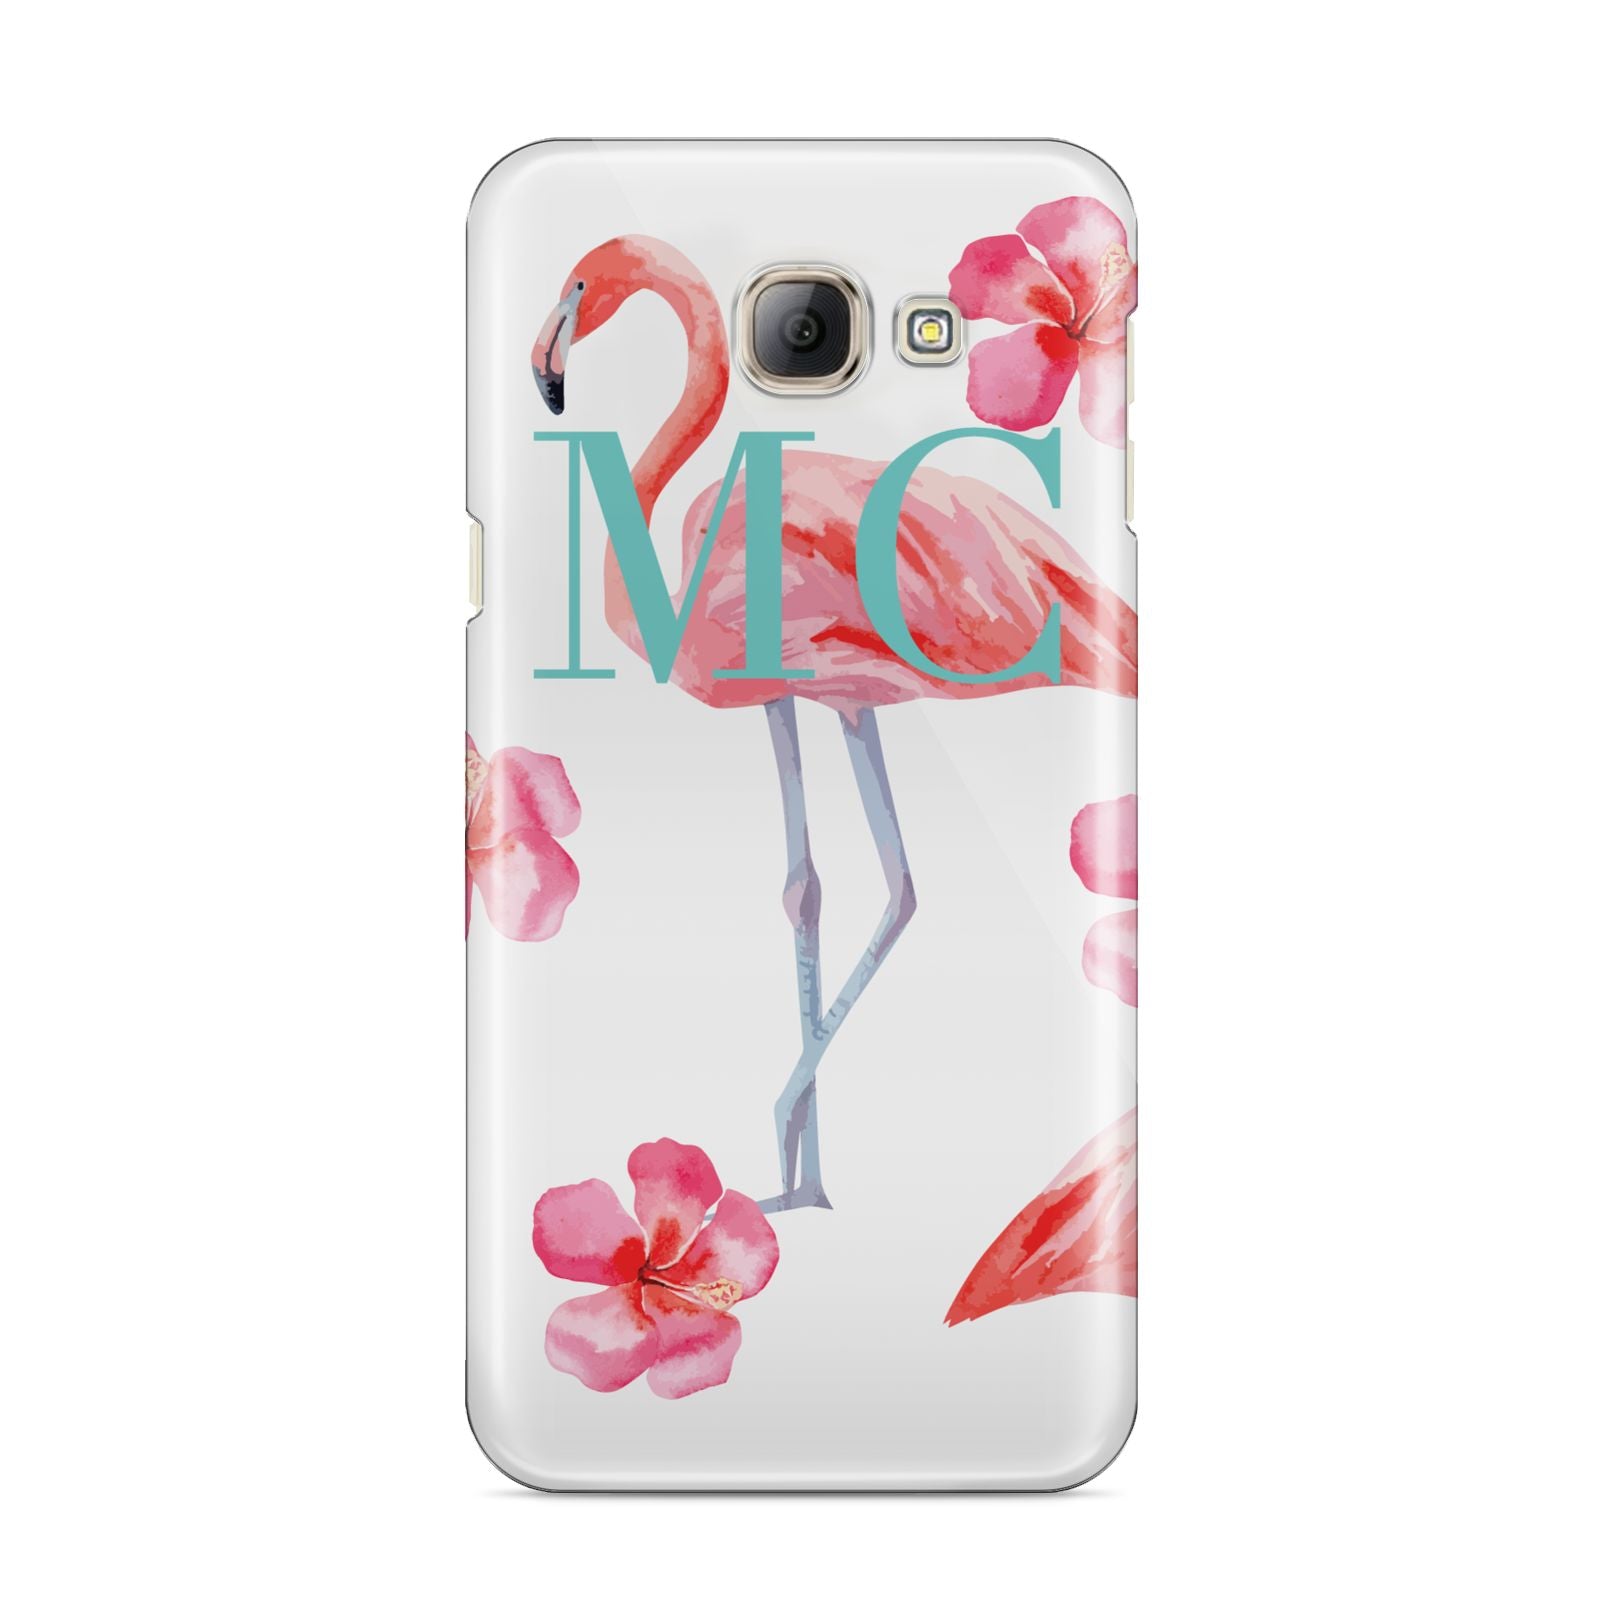 Personalised Initials Flamingo 3 Samsung Galaxy A8 2016 Case